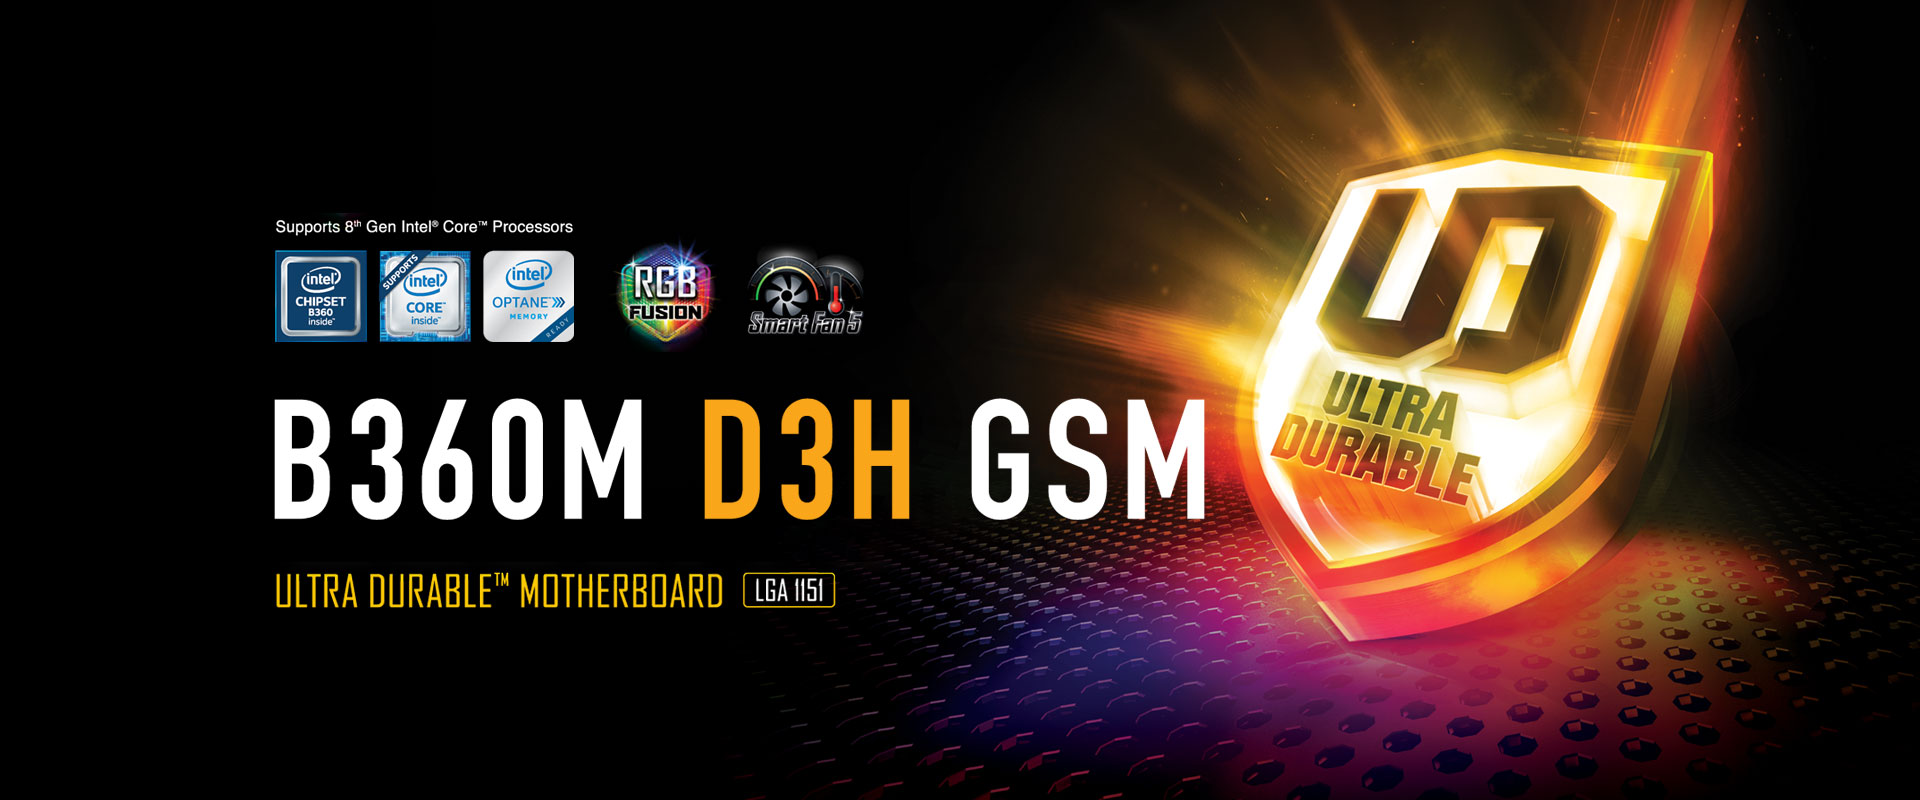 B360M D3H GSM (rev. 1.0) Key Features | Motherboard - GIGABYTE U.S.A.